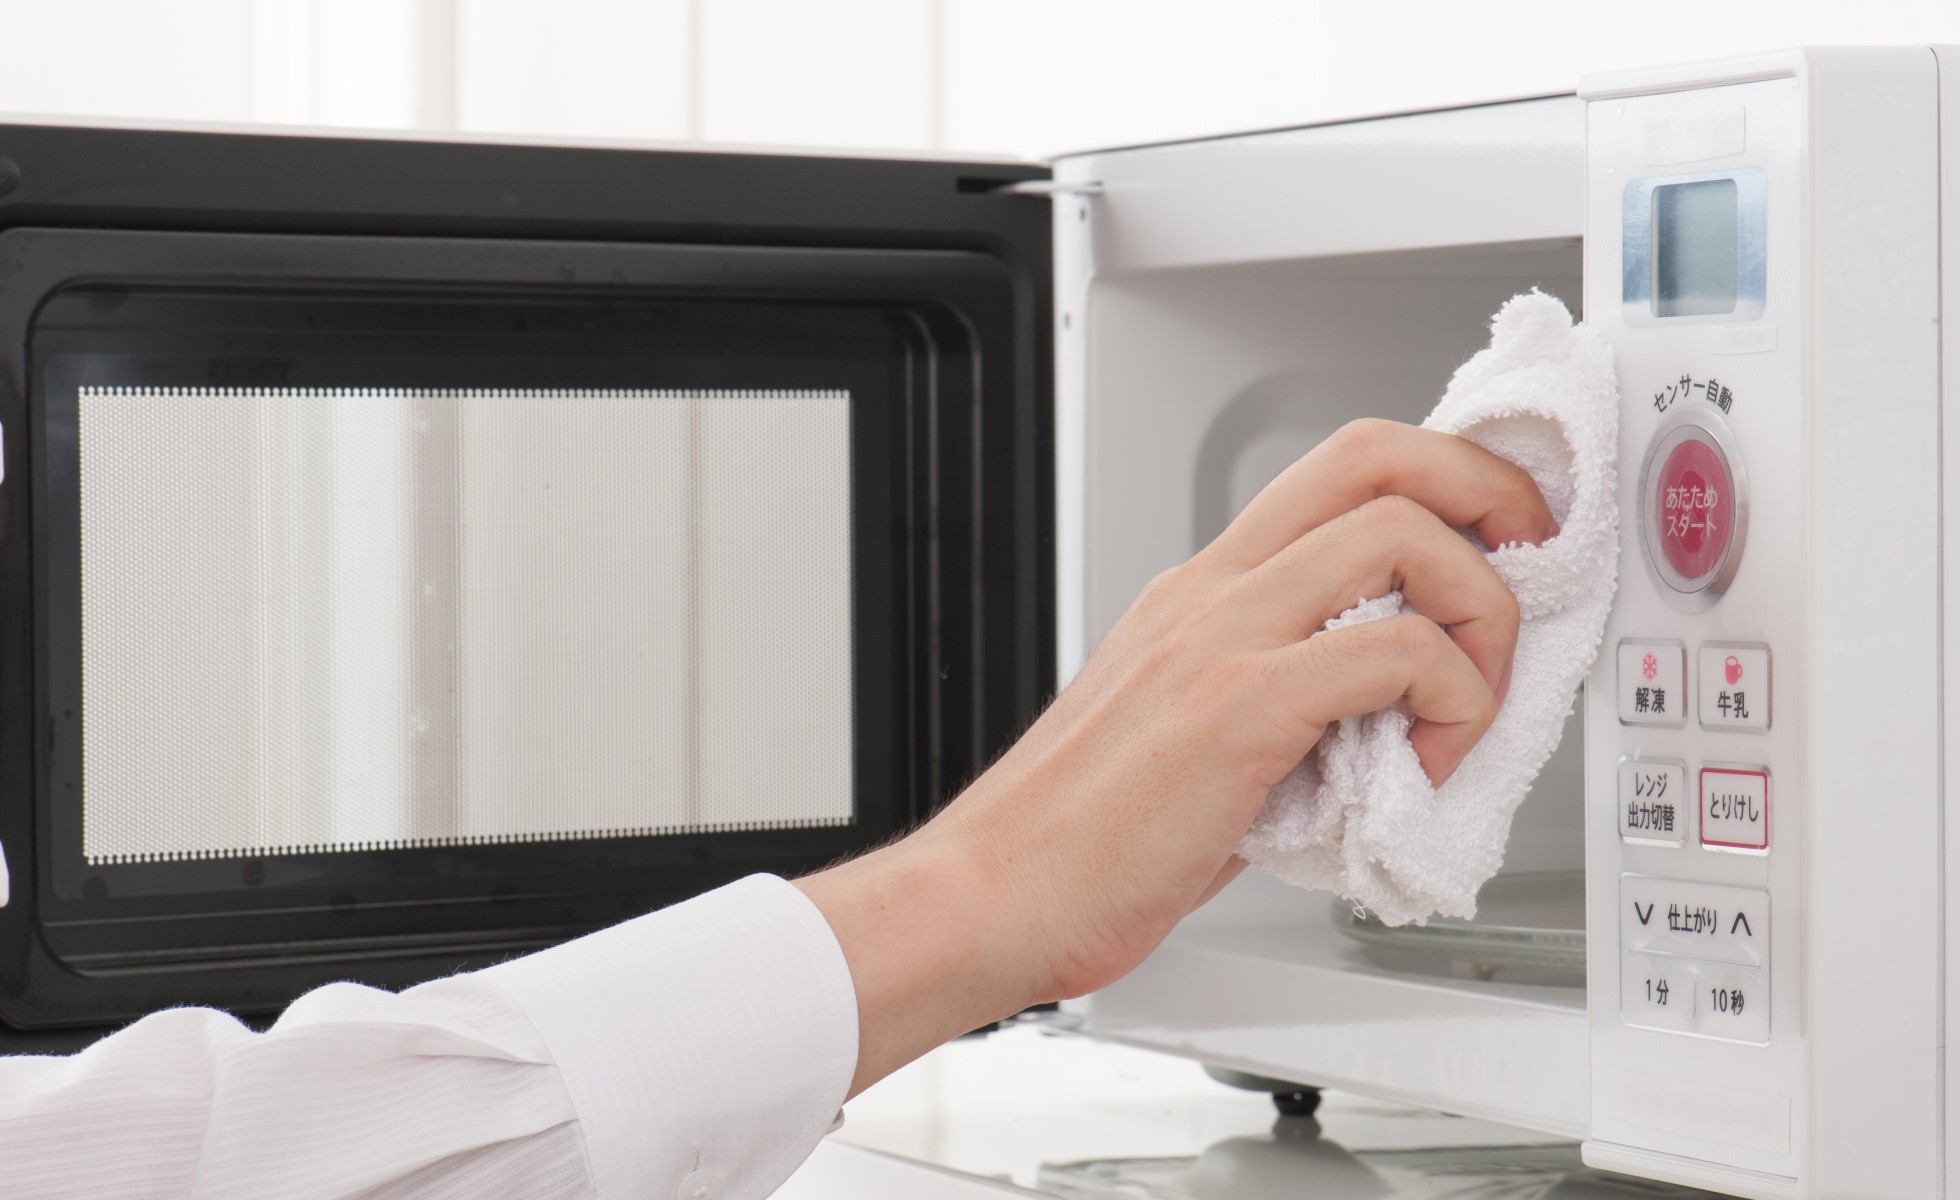 Trucos caseros para limpiar tu microondas sin esfuerzo